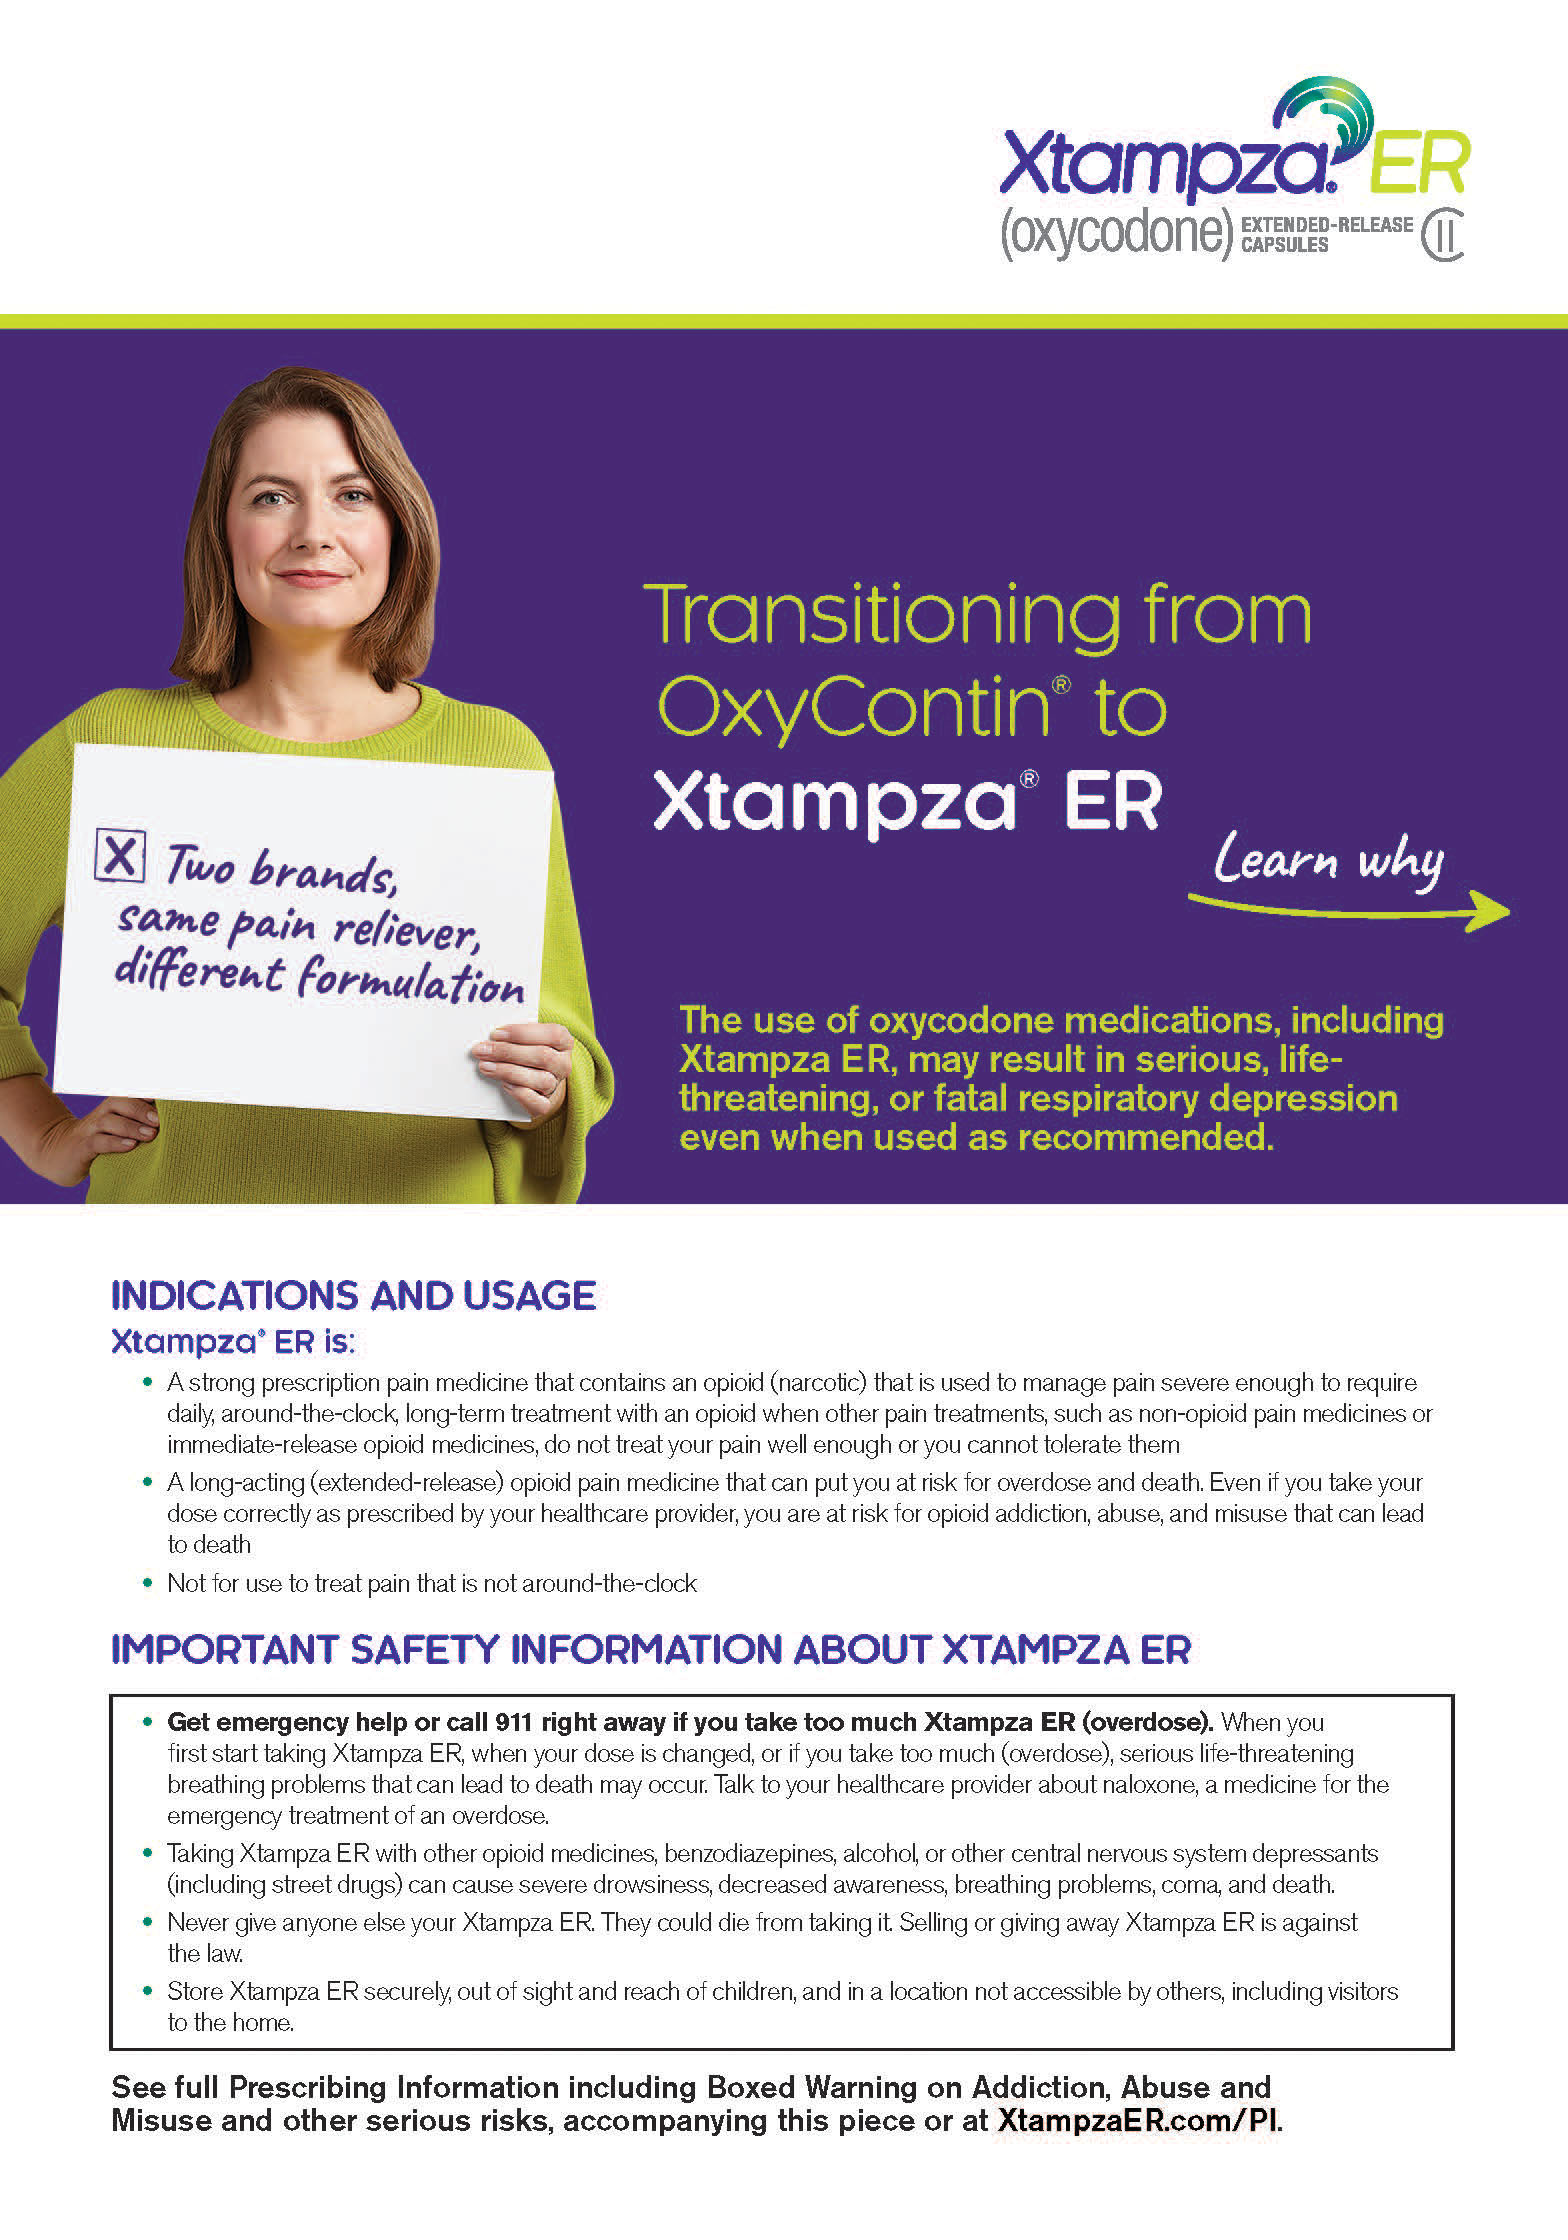 Transitioning to Xtampza ER thumbnail